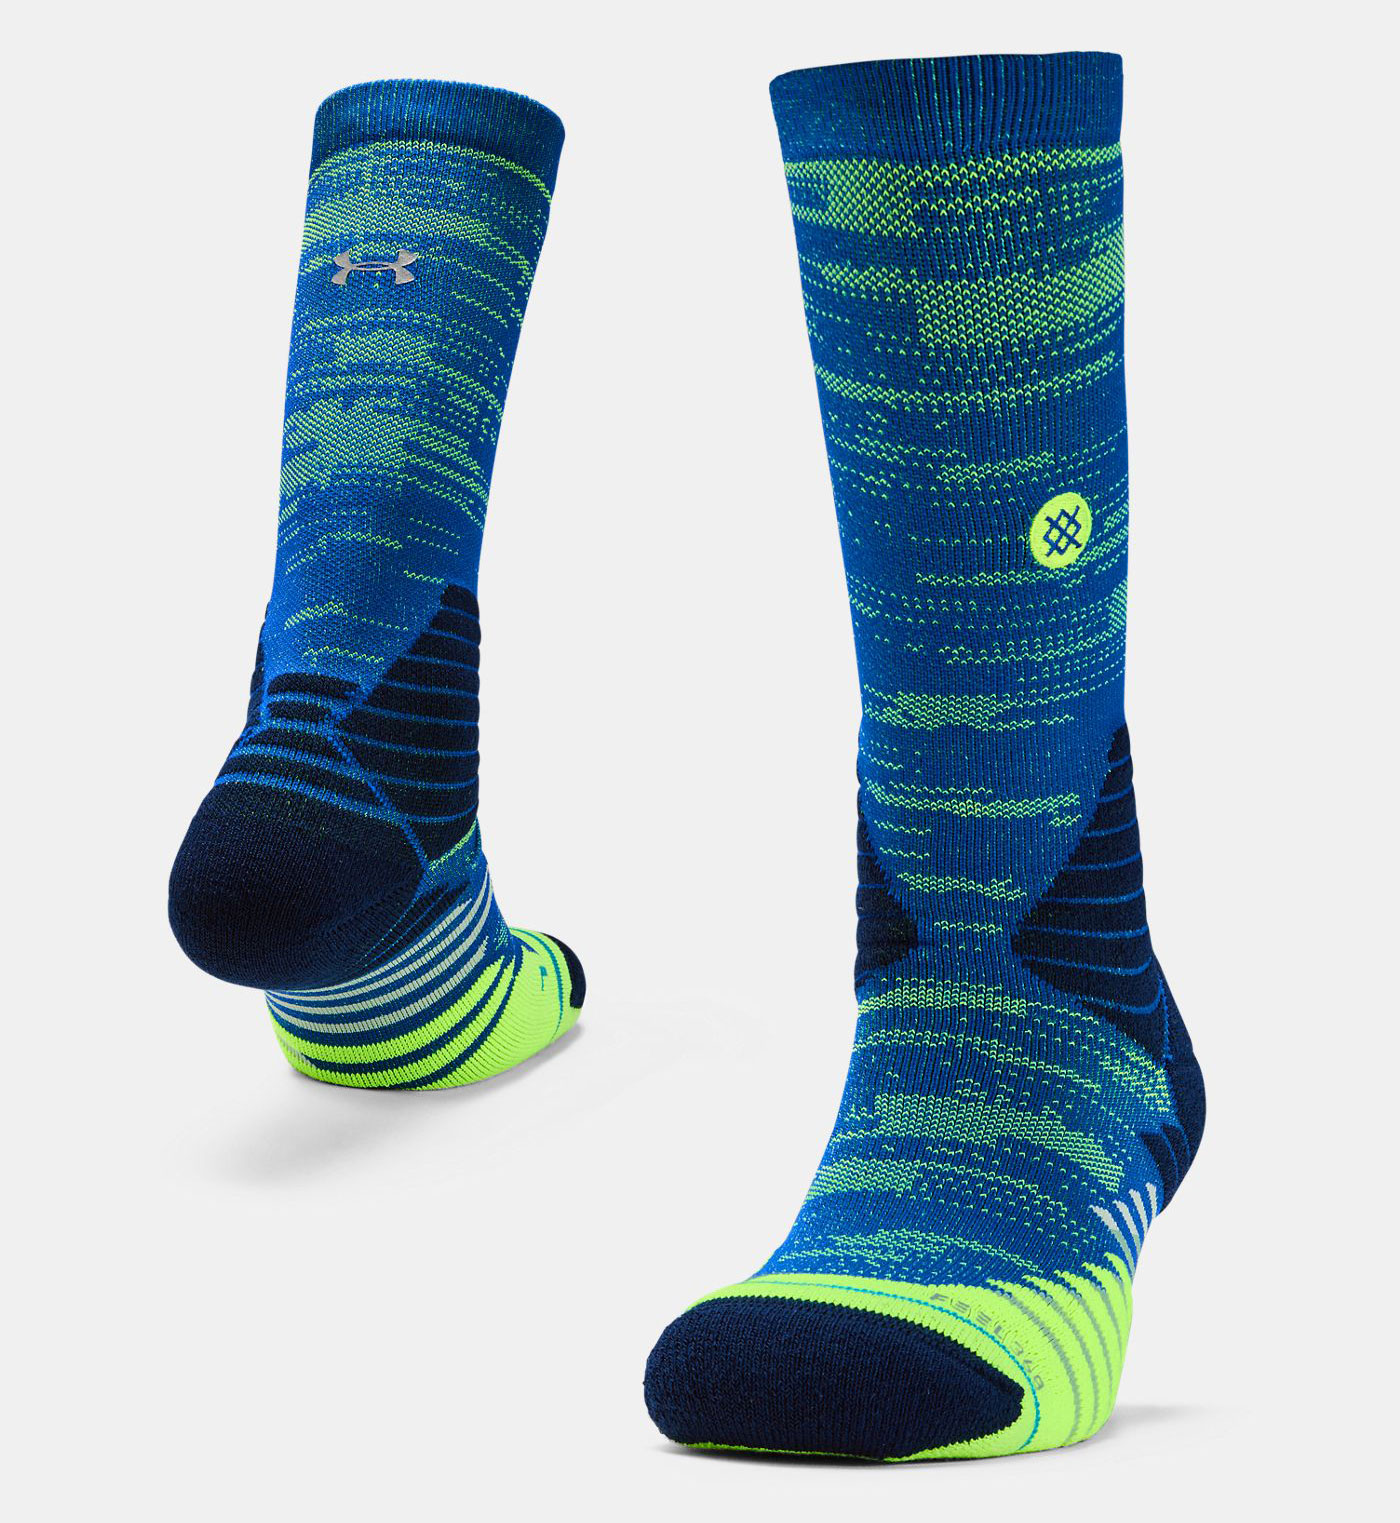 Curry 7 NERF Super Soaker Shirt Socks Clothing Match | SneakerFits.com